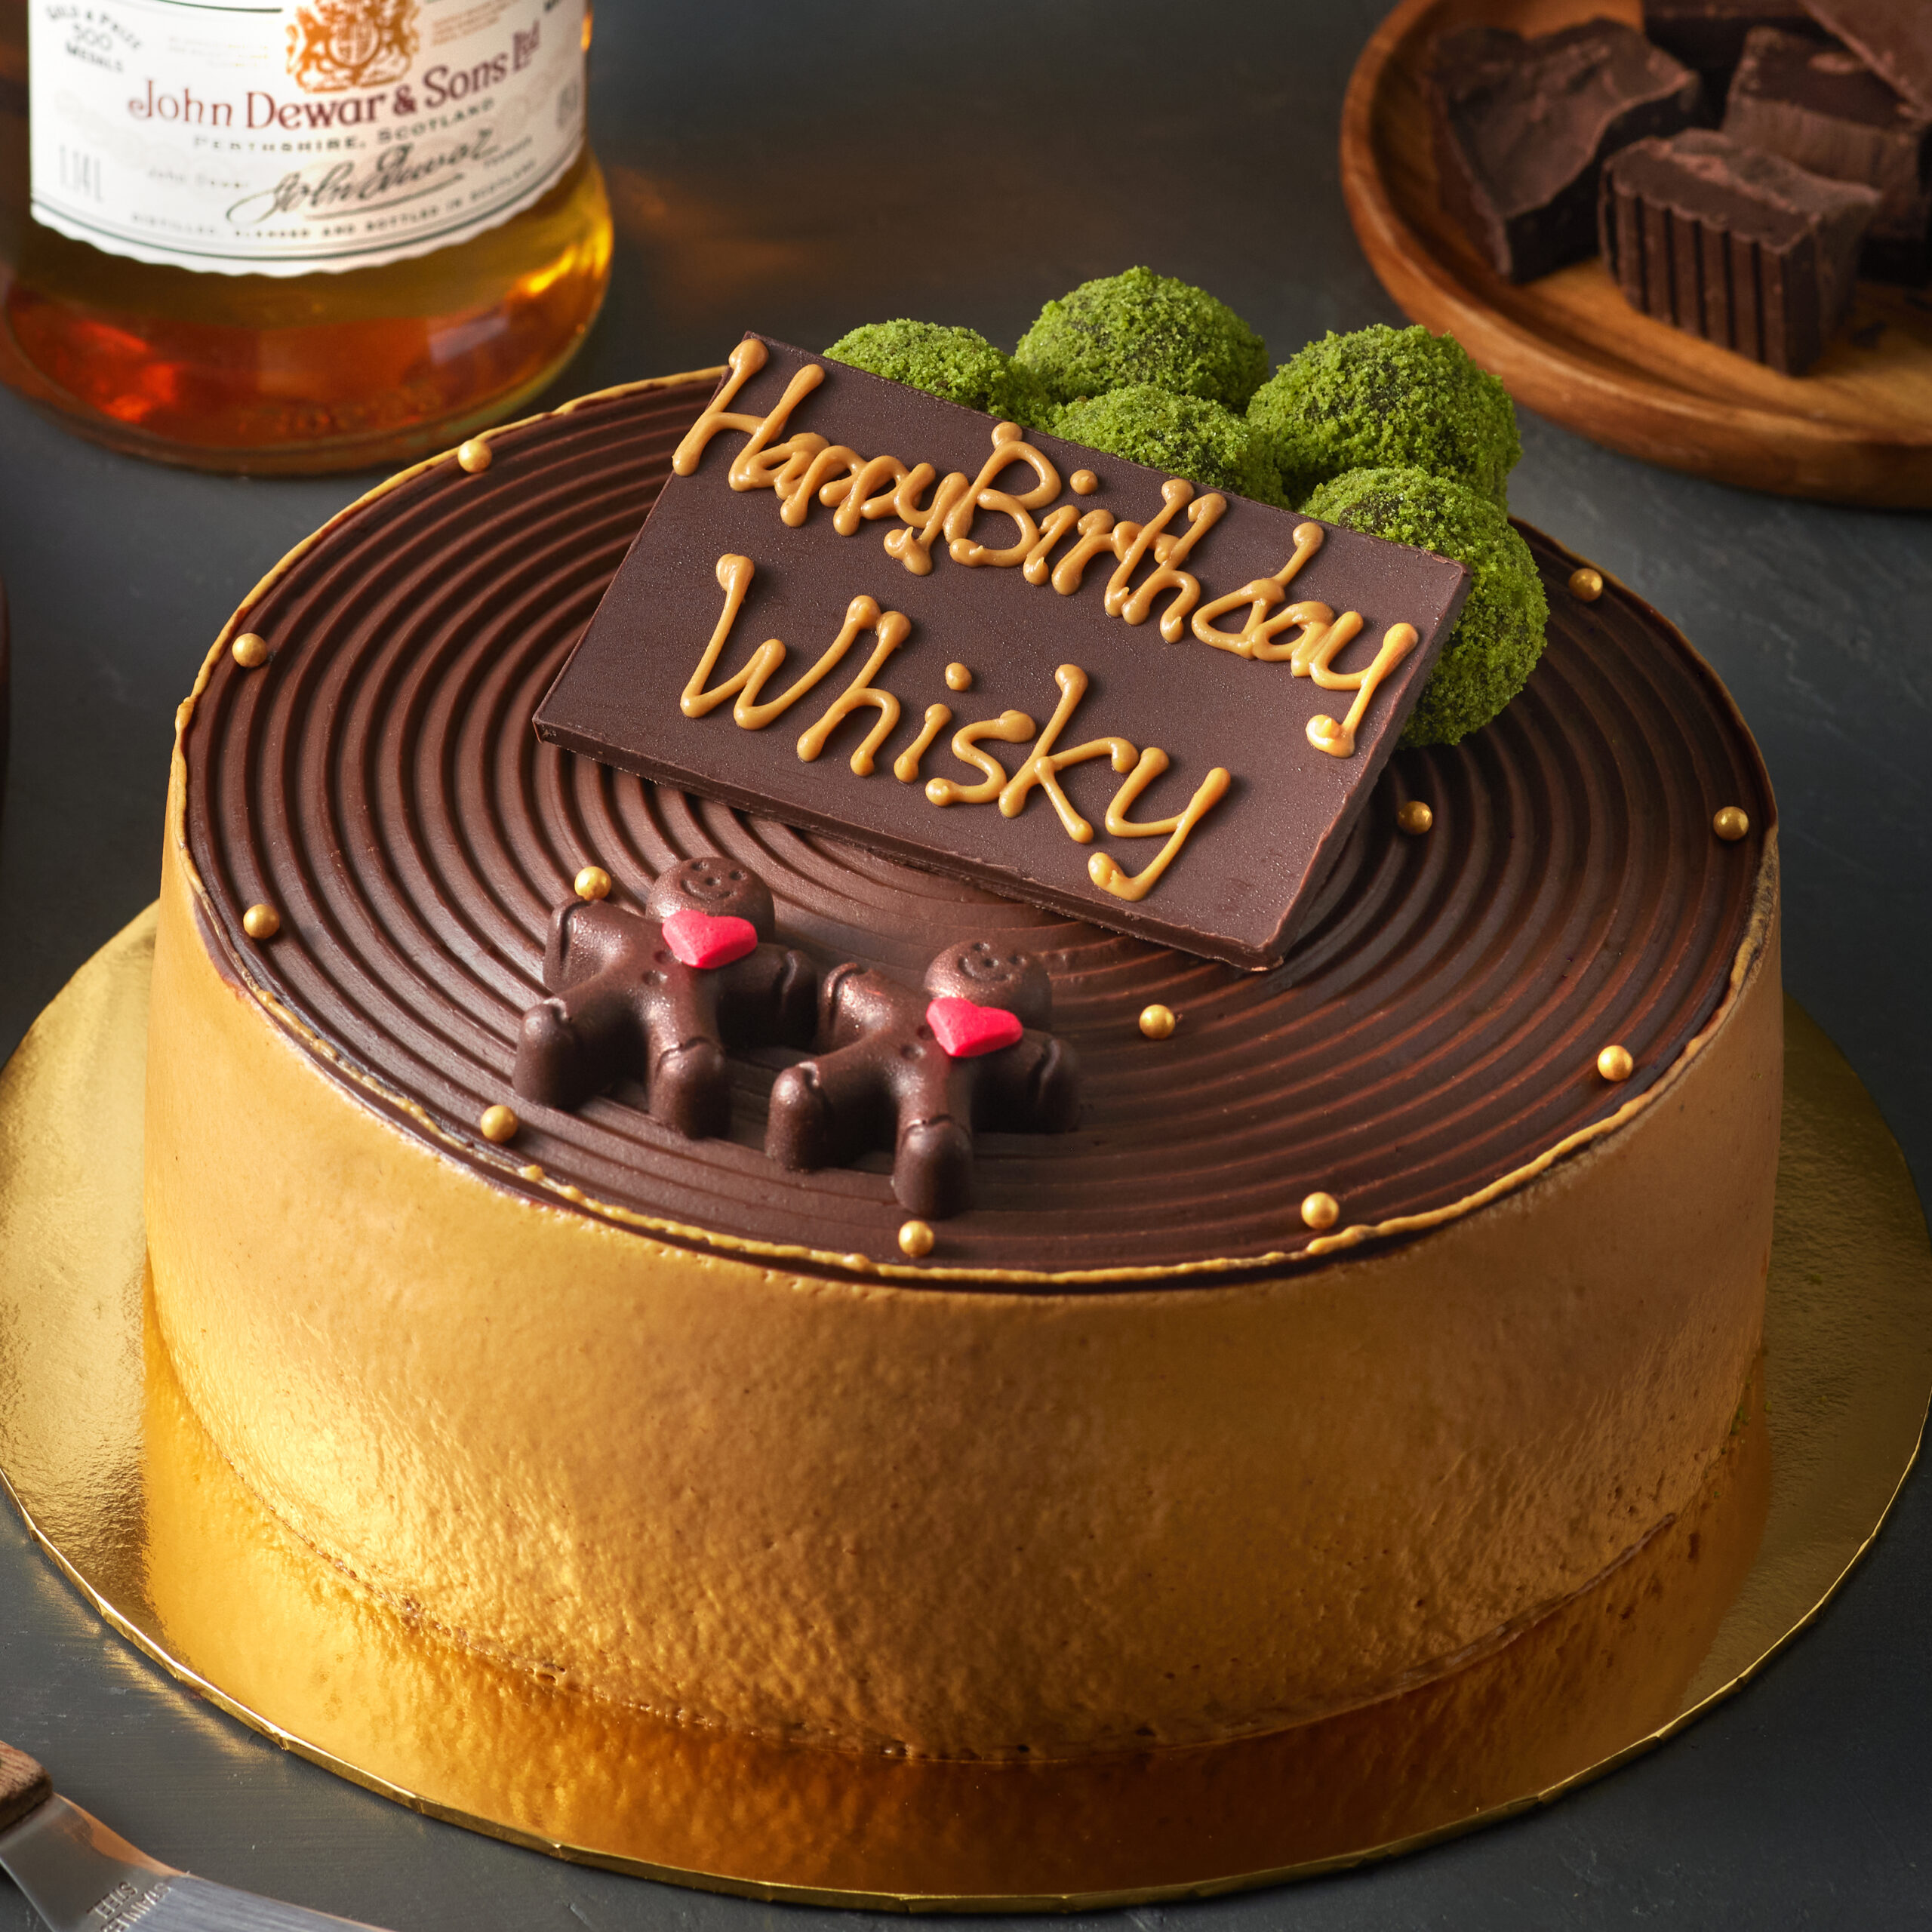 Eggless Personalized Name Cake  Happy Birthday Liquor Themed Jack Daniels   Whisky Cake by CakeZone  Gift customizablephotocakes Online  Buy Now